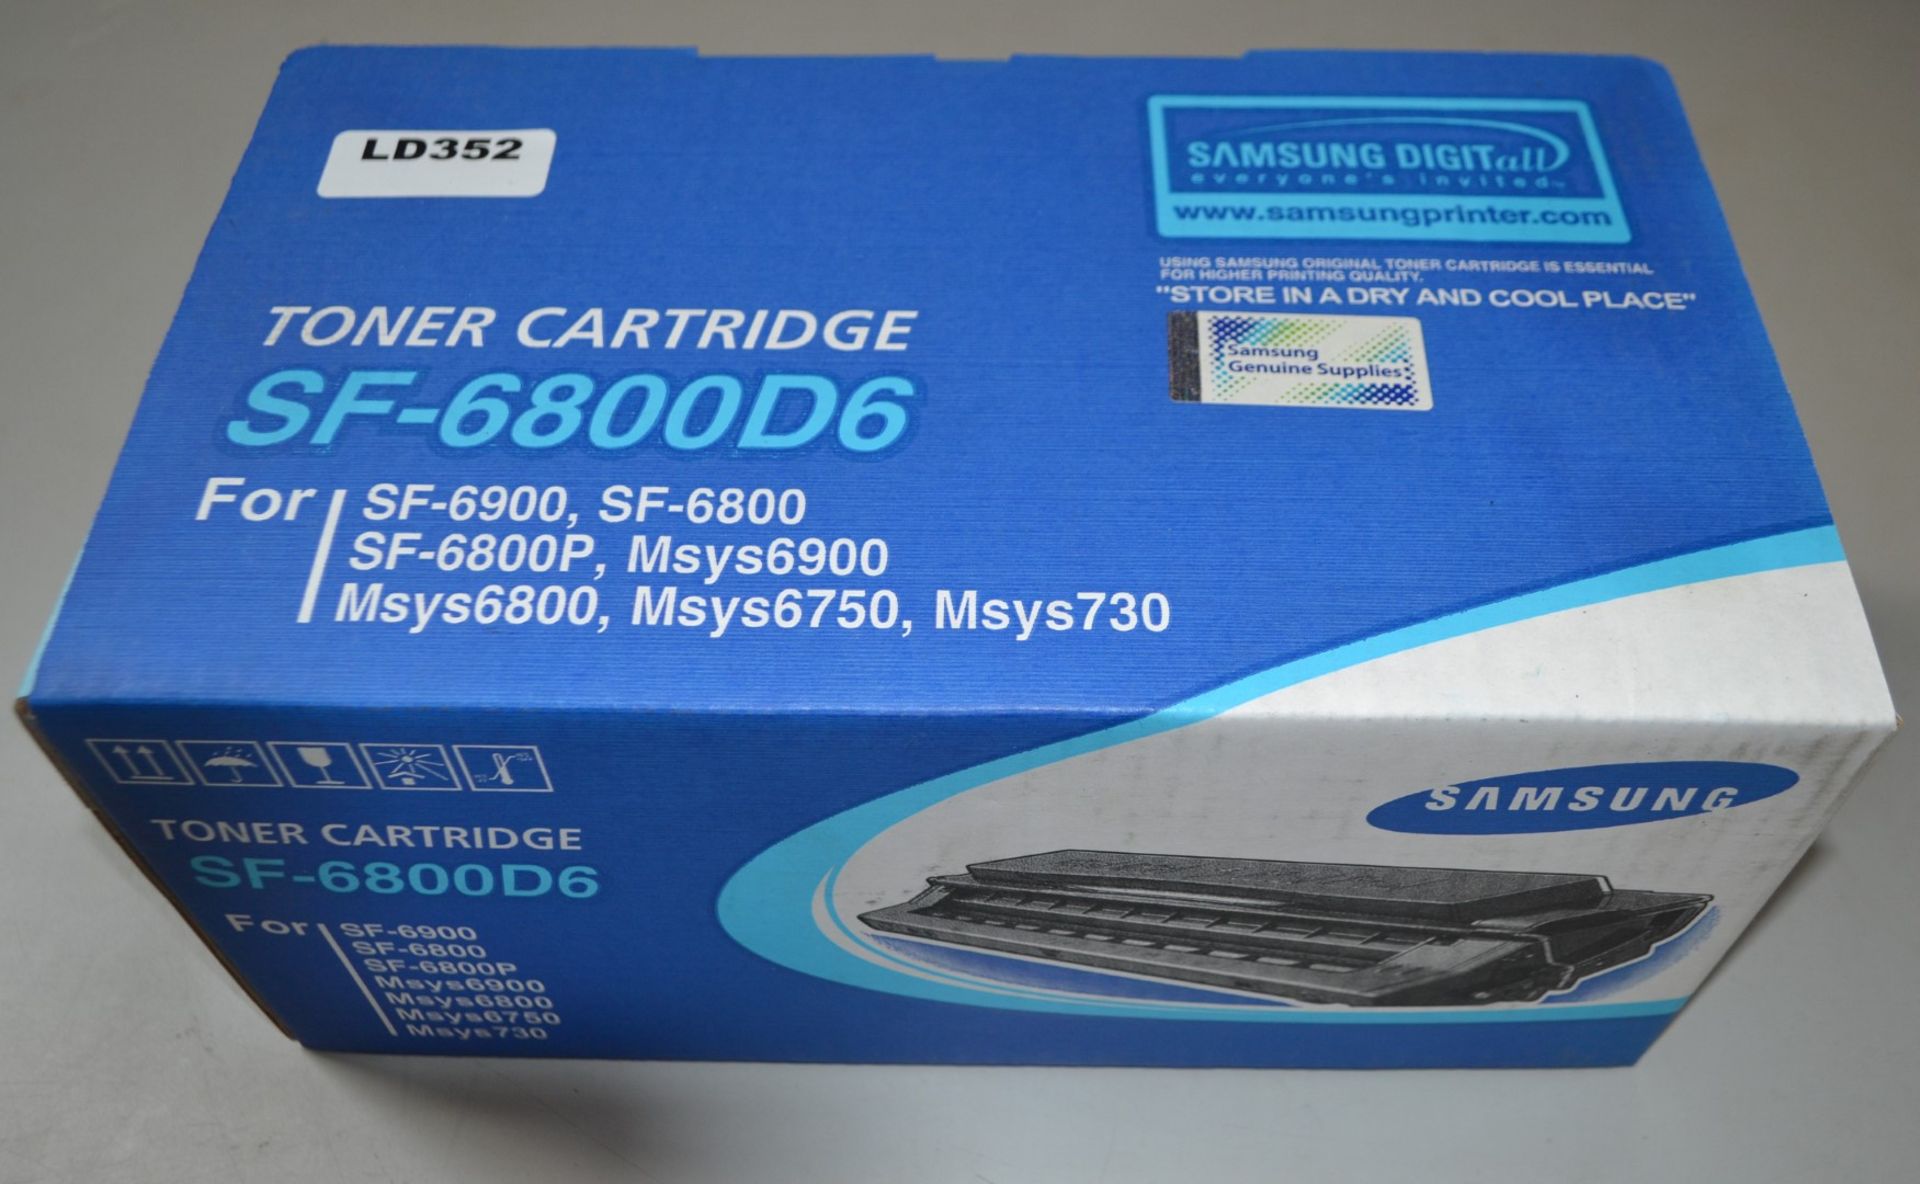 1 x New Samsung Toner Cartridge SF-6800D6 - Ref: LD352 - CL409 - Altrincham WA14 - Image 4 of 4